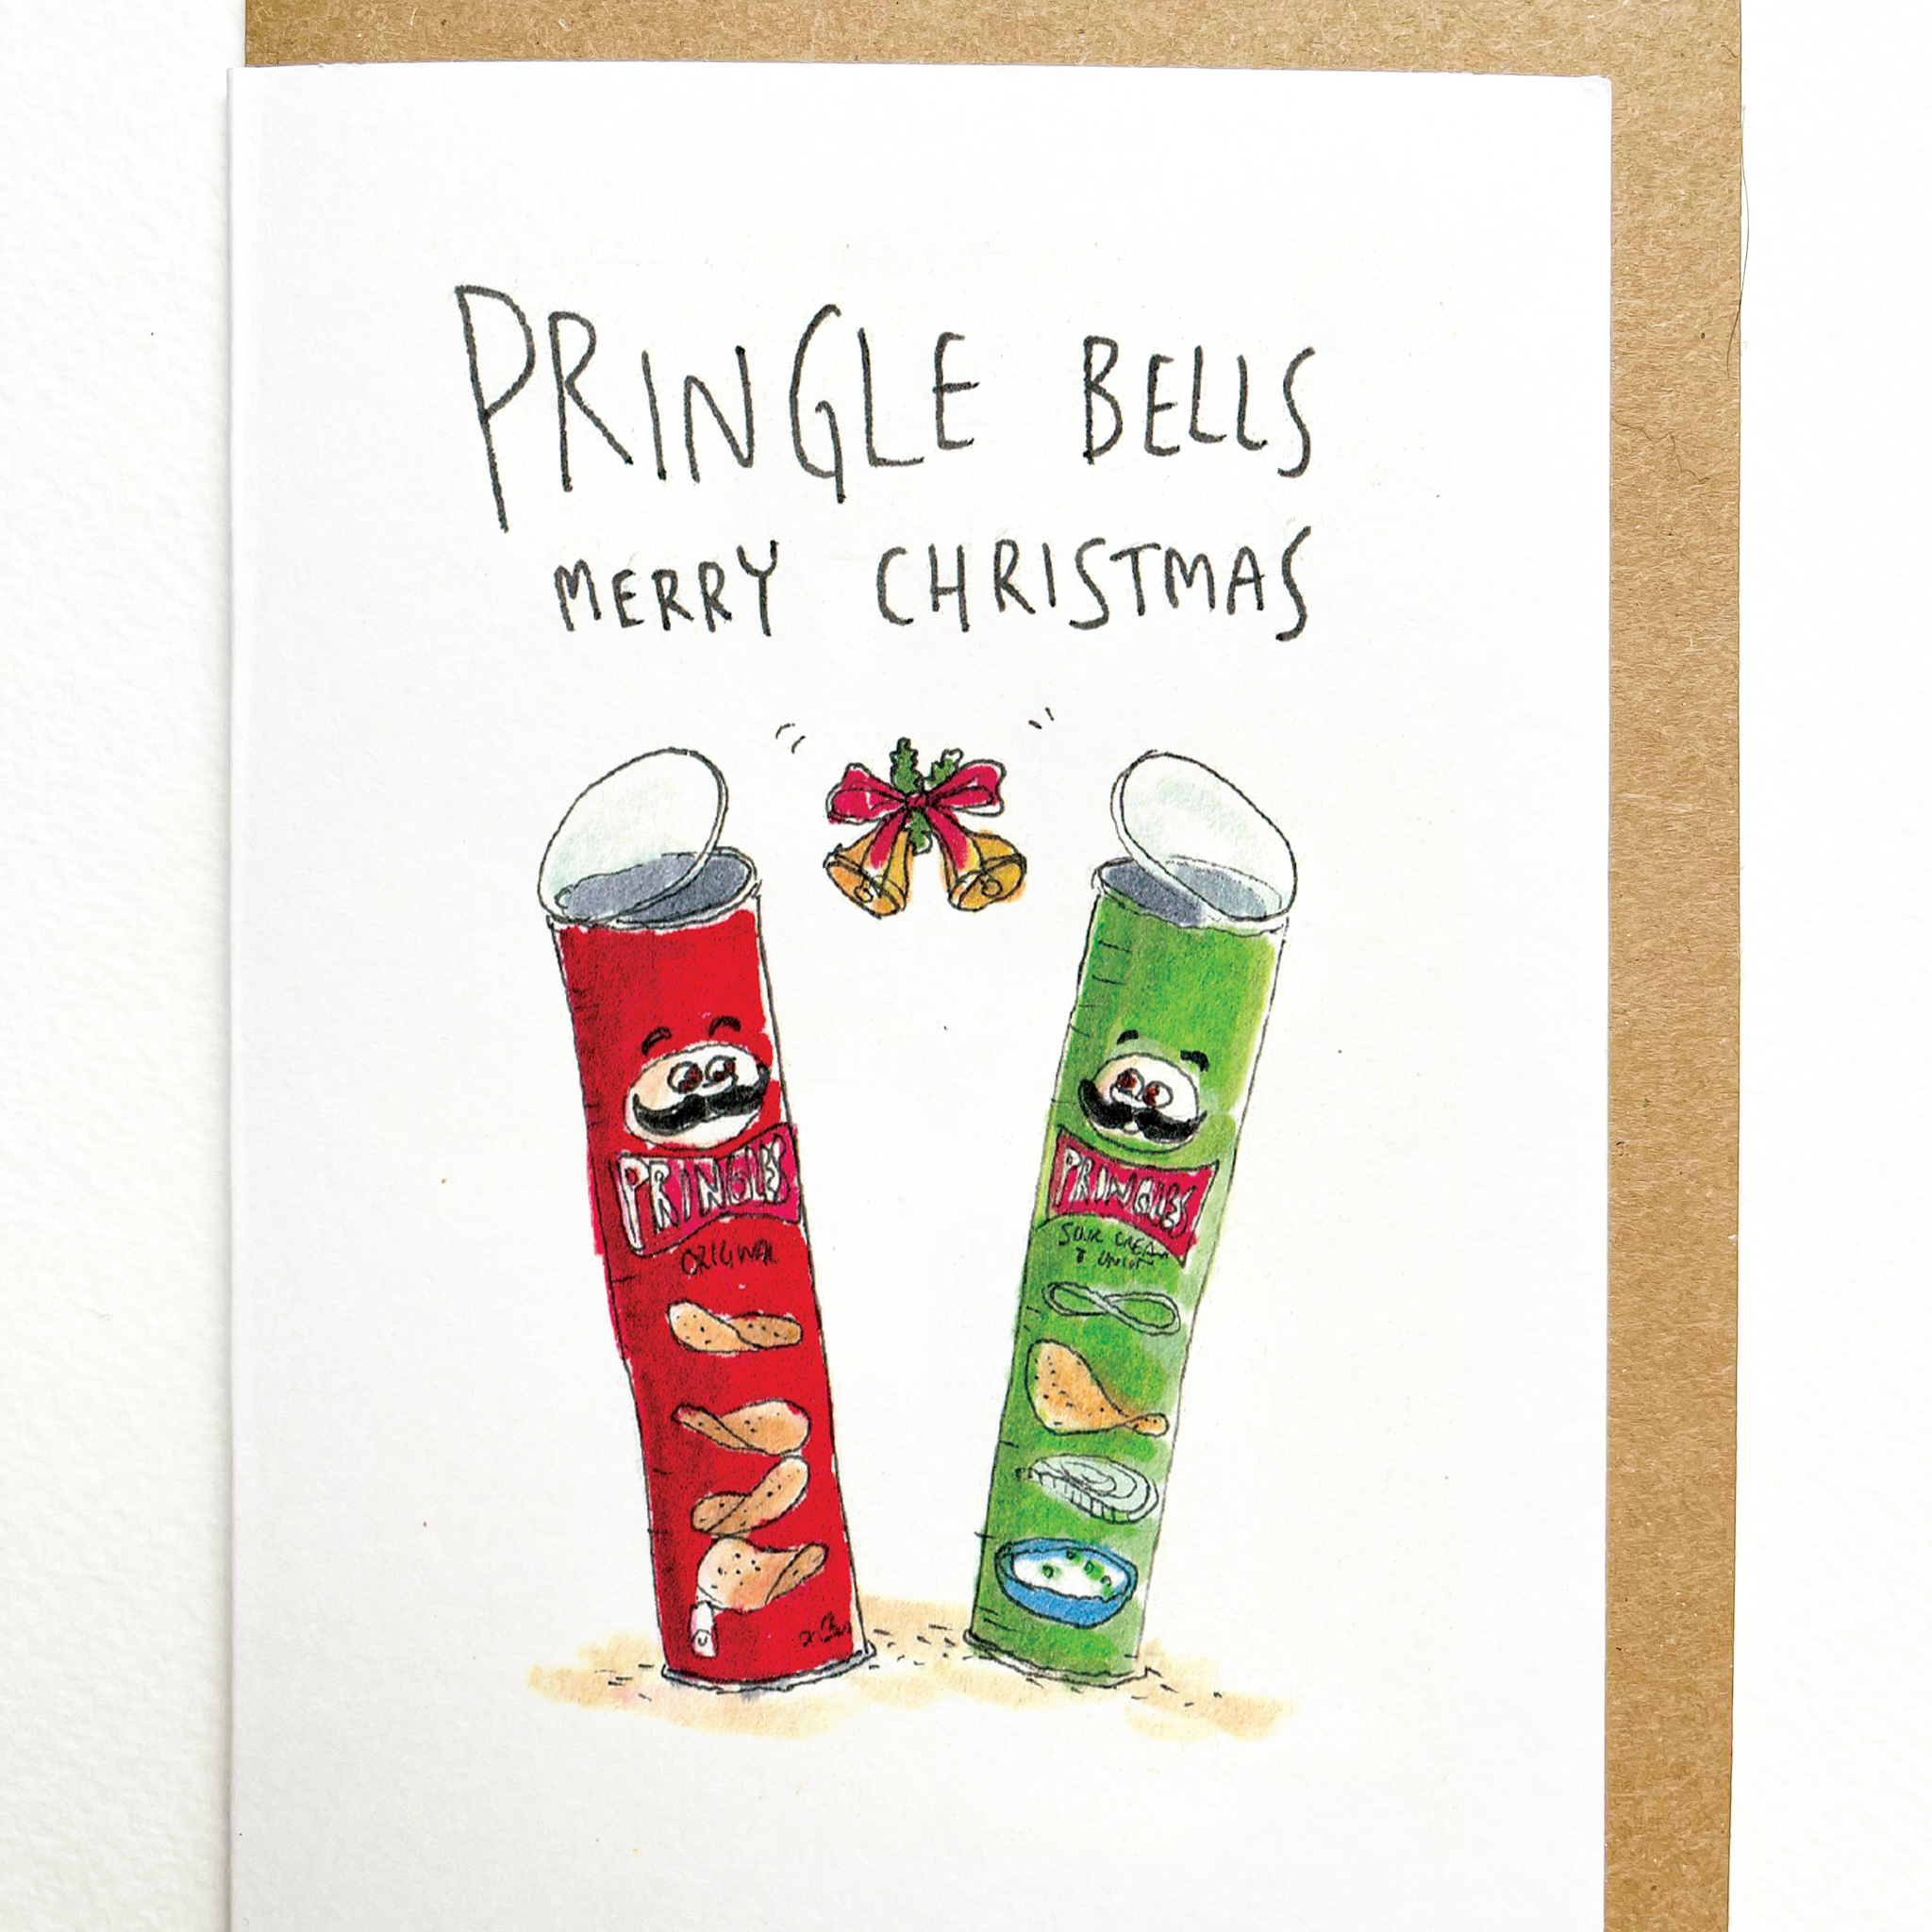 Pringle Bells, Merry Christmas